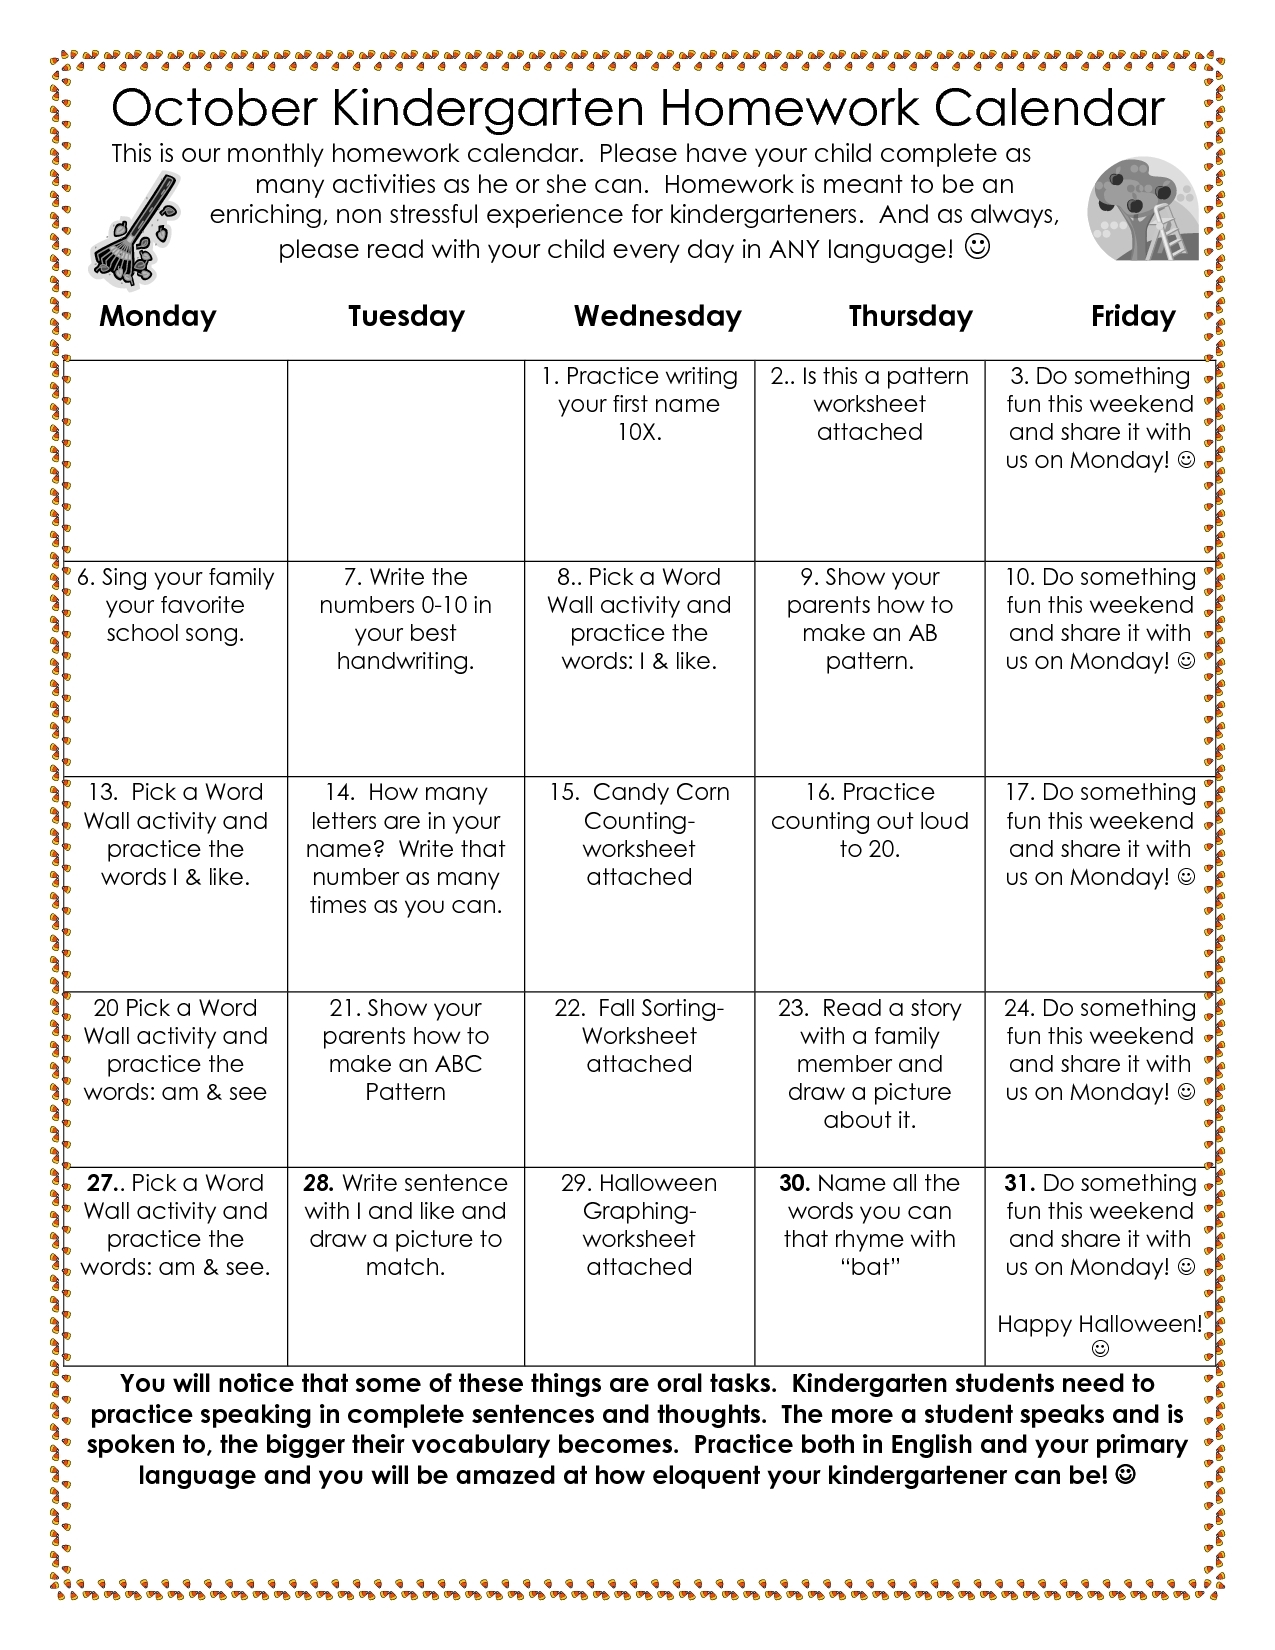 Pre-K Monthly Homework Calendar • Printable Blank Calendar-Monthly Homework For Pre-K Students